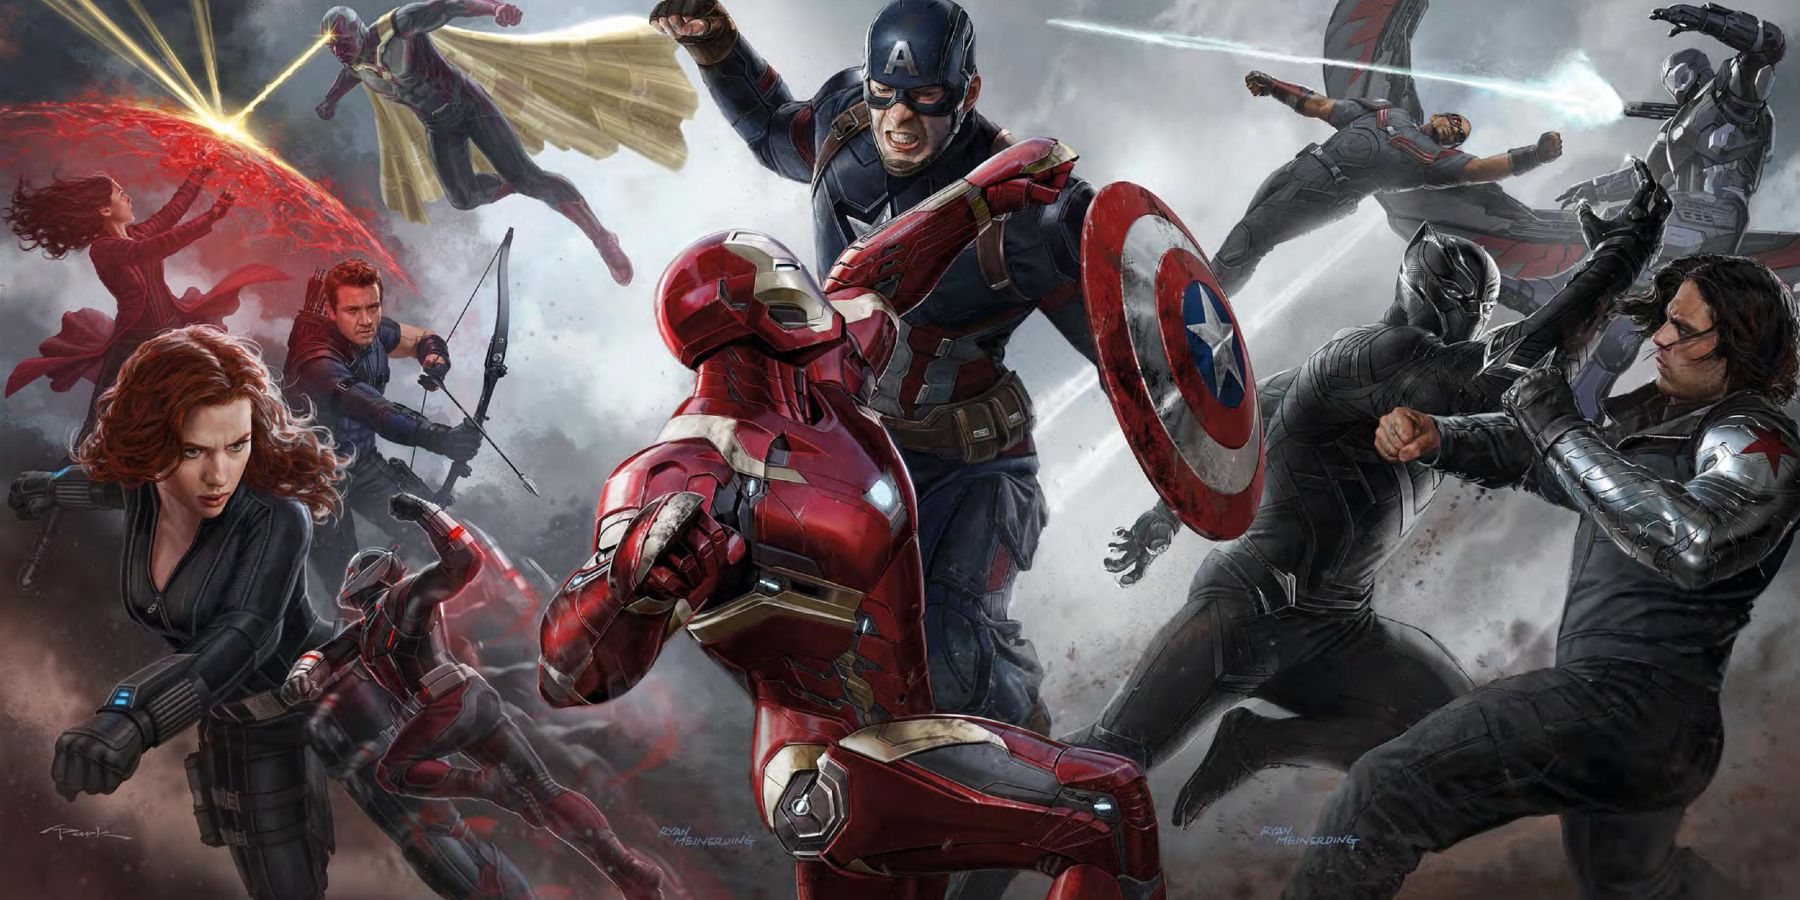 The Avengers fight in concept art for Captain America Civil War